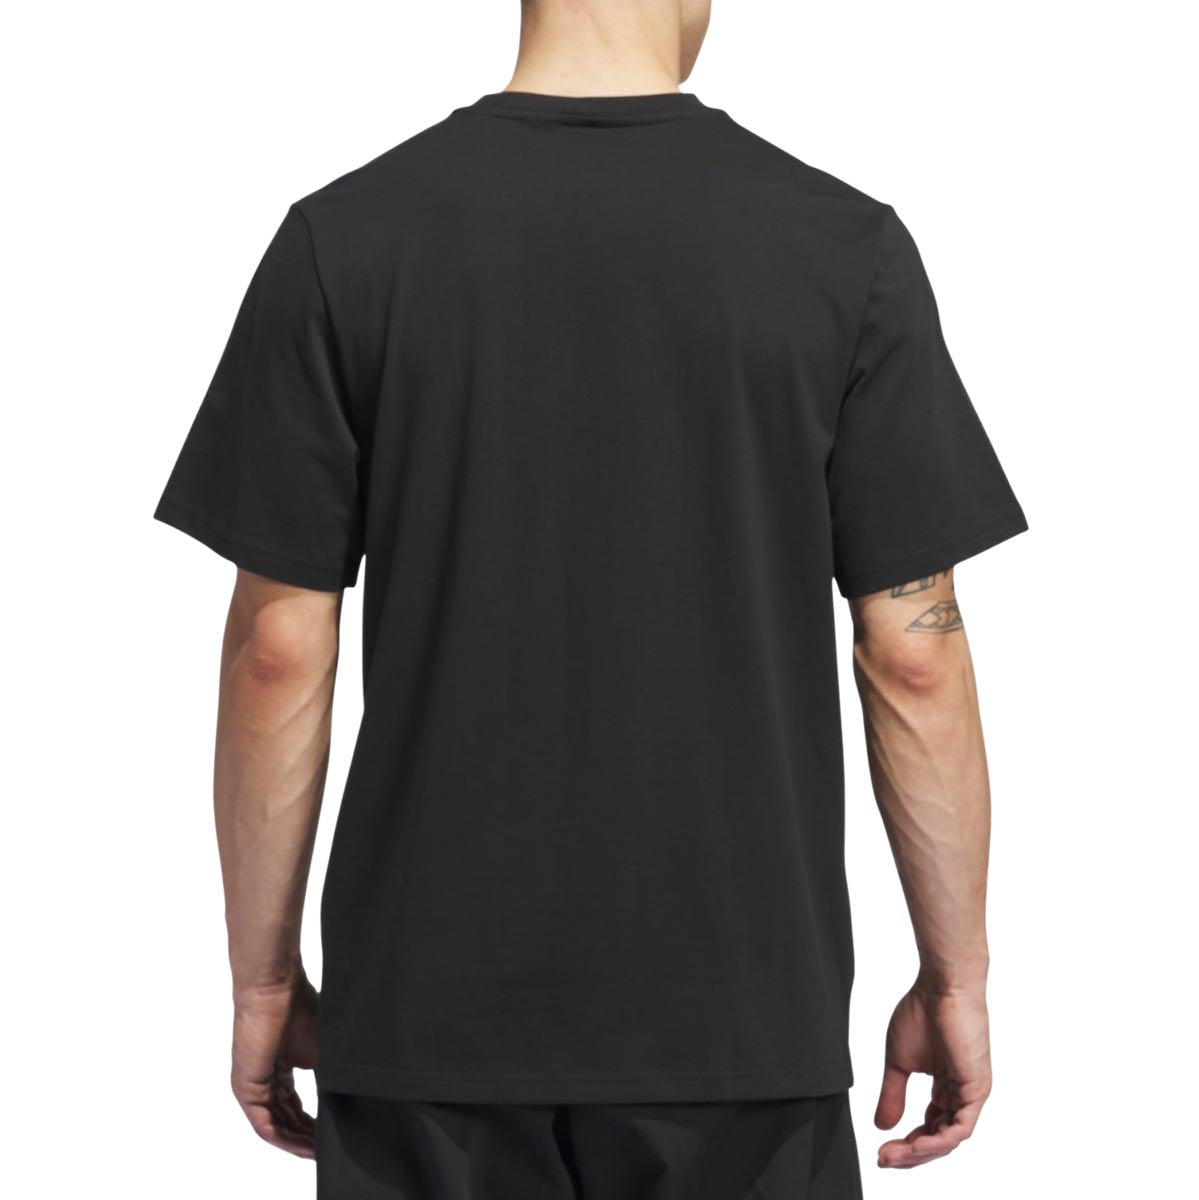 Adidas Skateboarding Wide Angle T-Shirt - Black/Royblu image 3